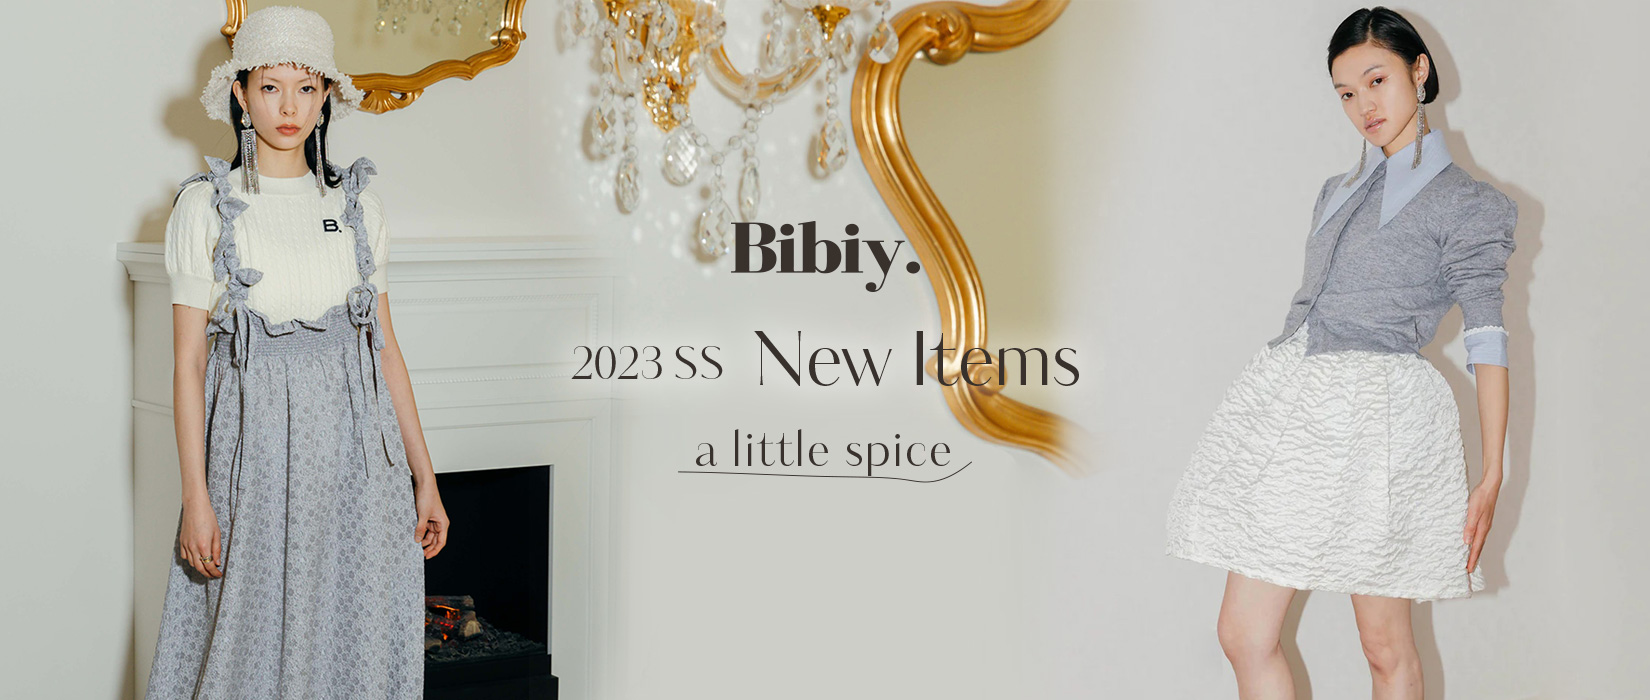 Bibiy. -a little spice- 2023SS New Items